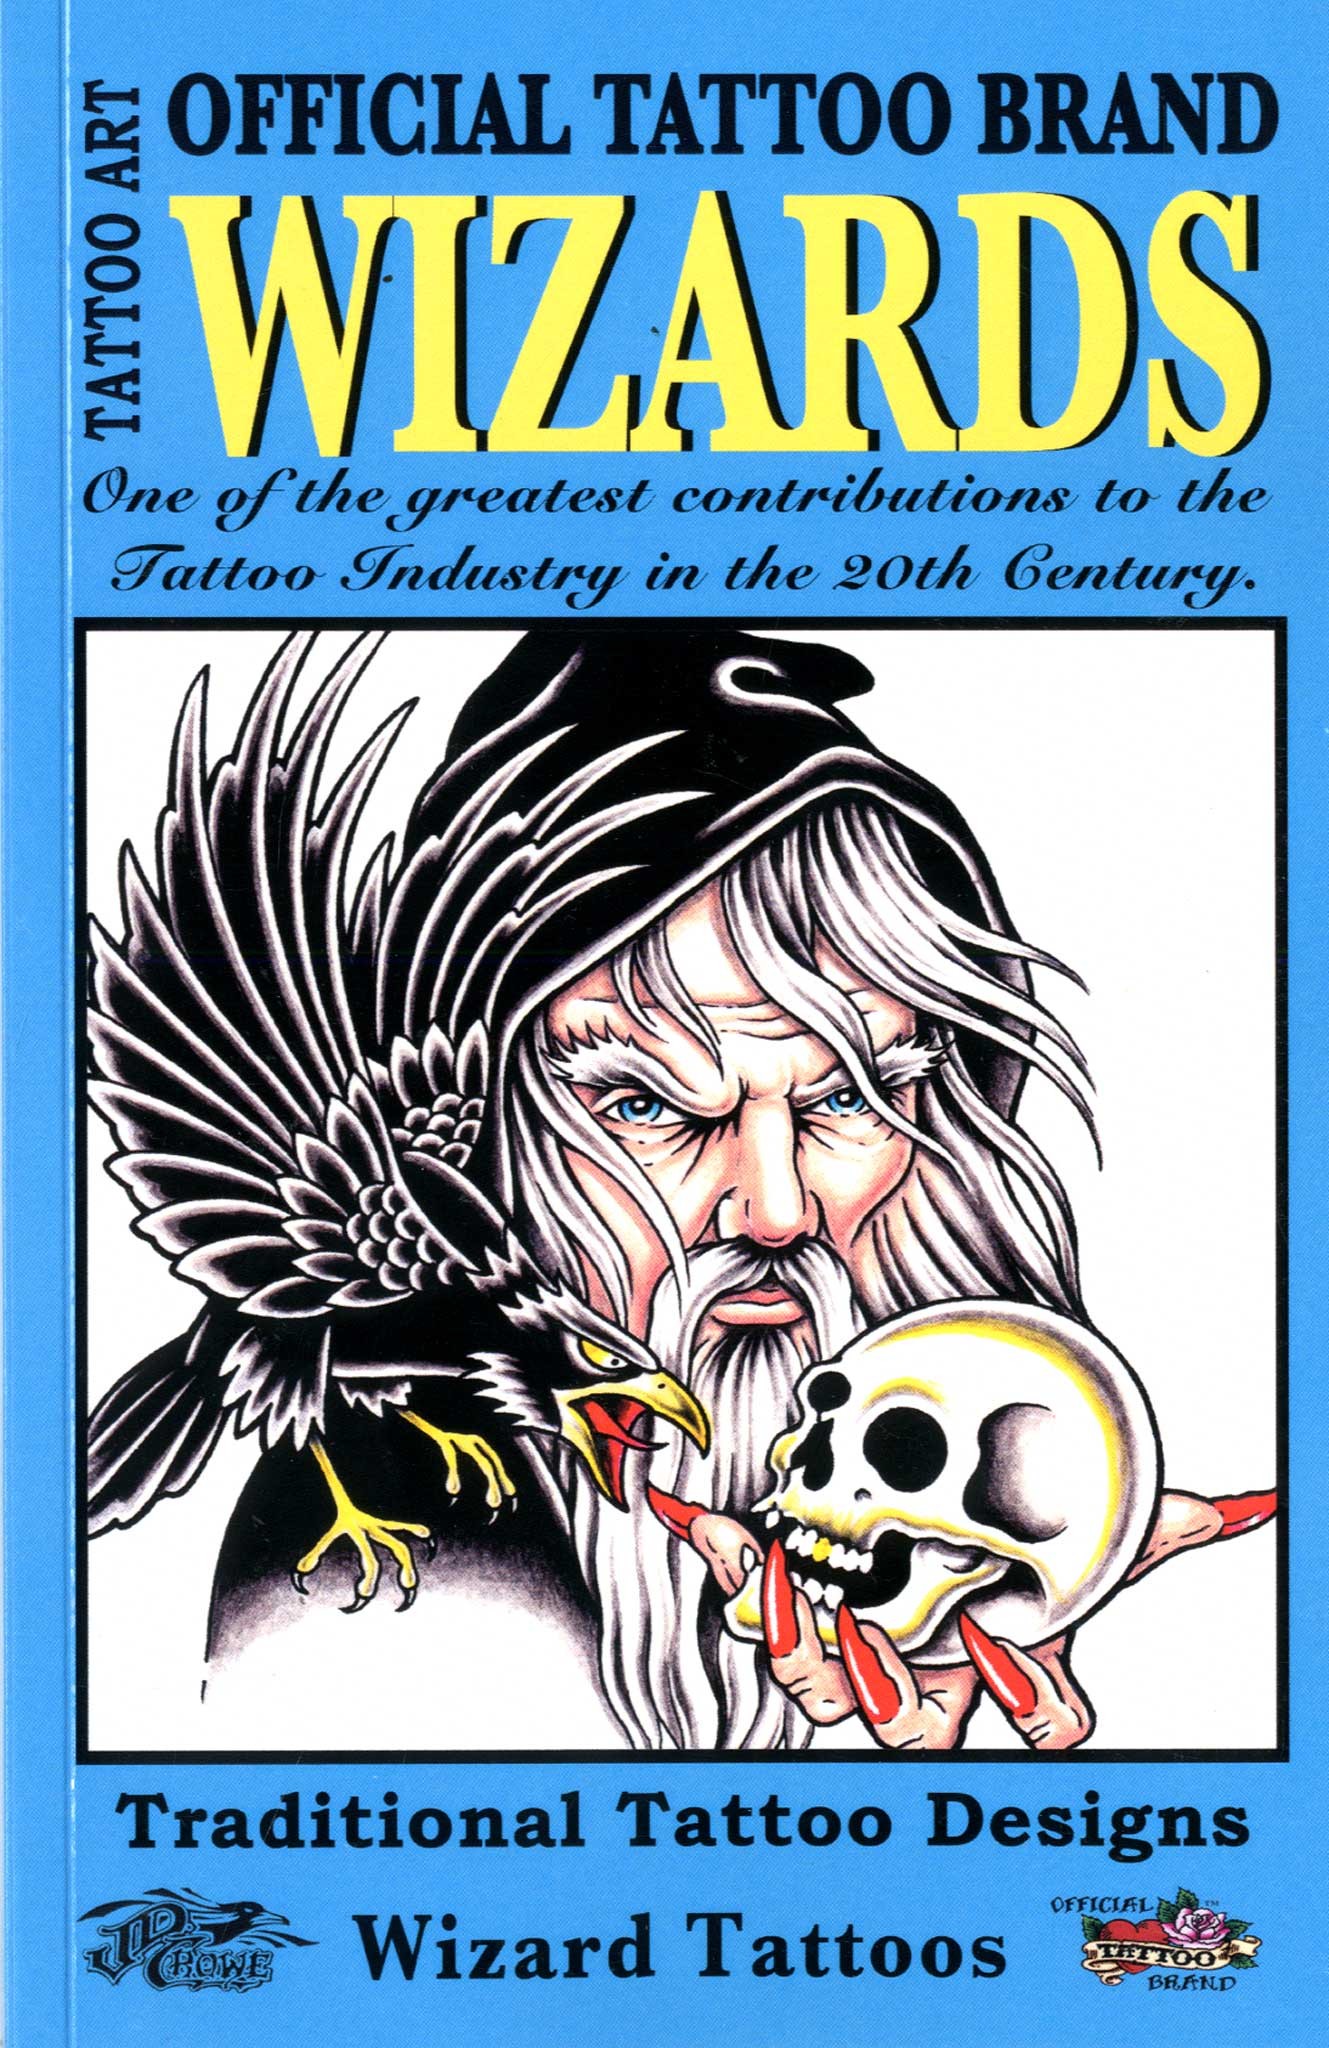 35 Wonderful The Wizard of Oz Tattoos  Tattoo Ideas Artists and Models